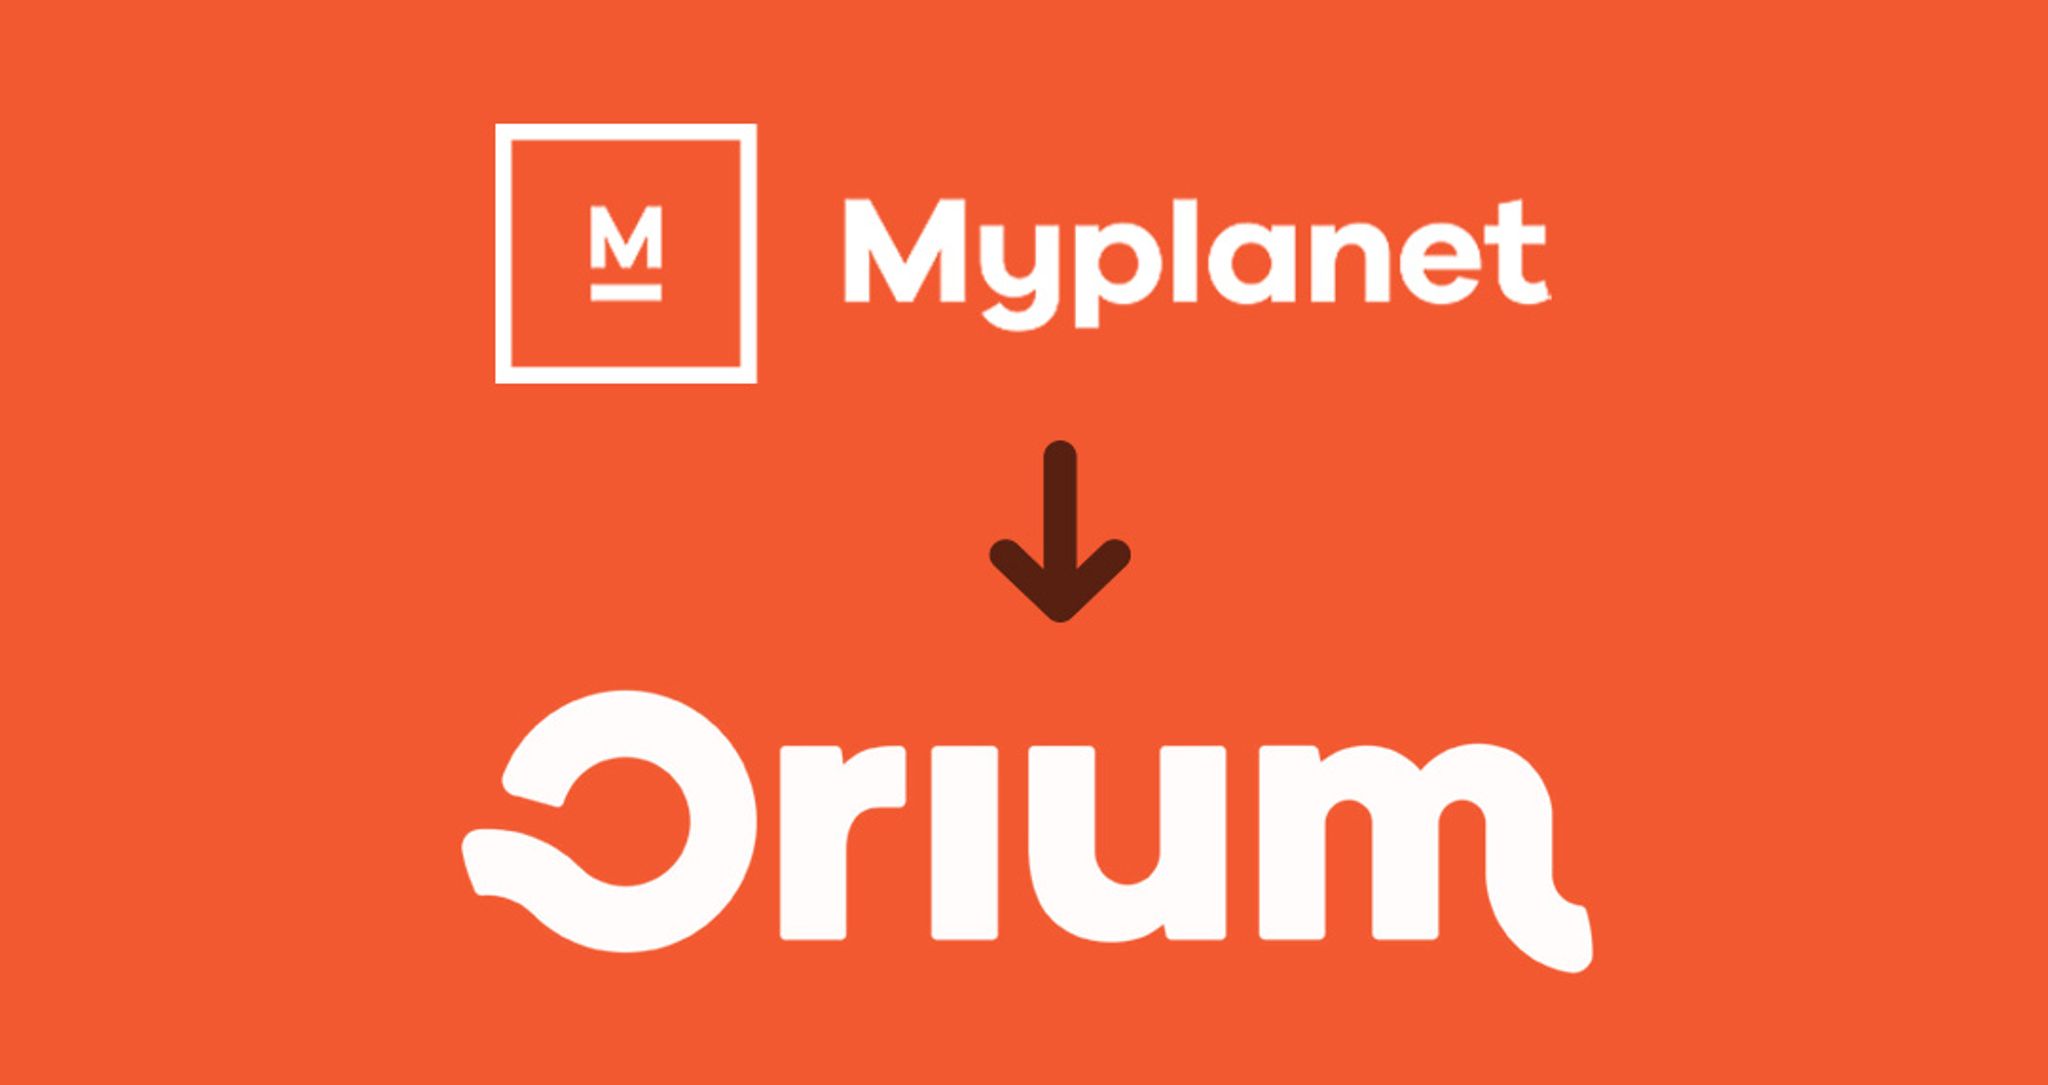 Image of Myplanet logo transforming to Orium logo